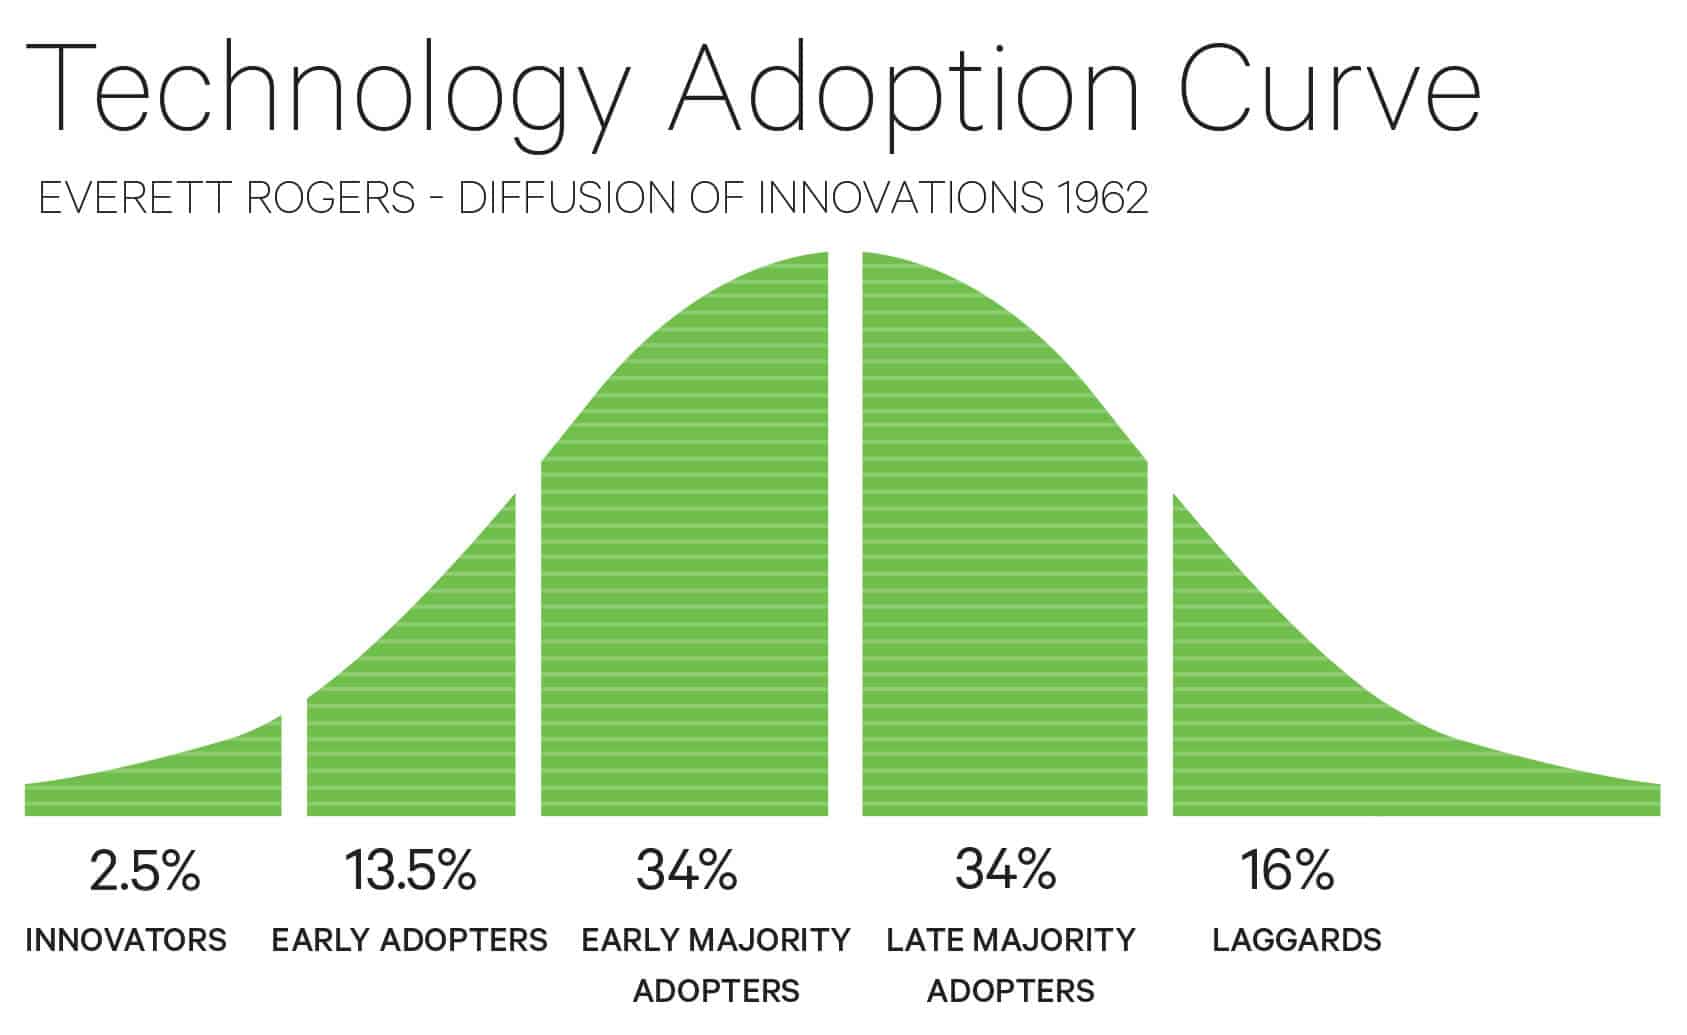 Technology adoption curve - Everett Rogers